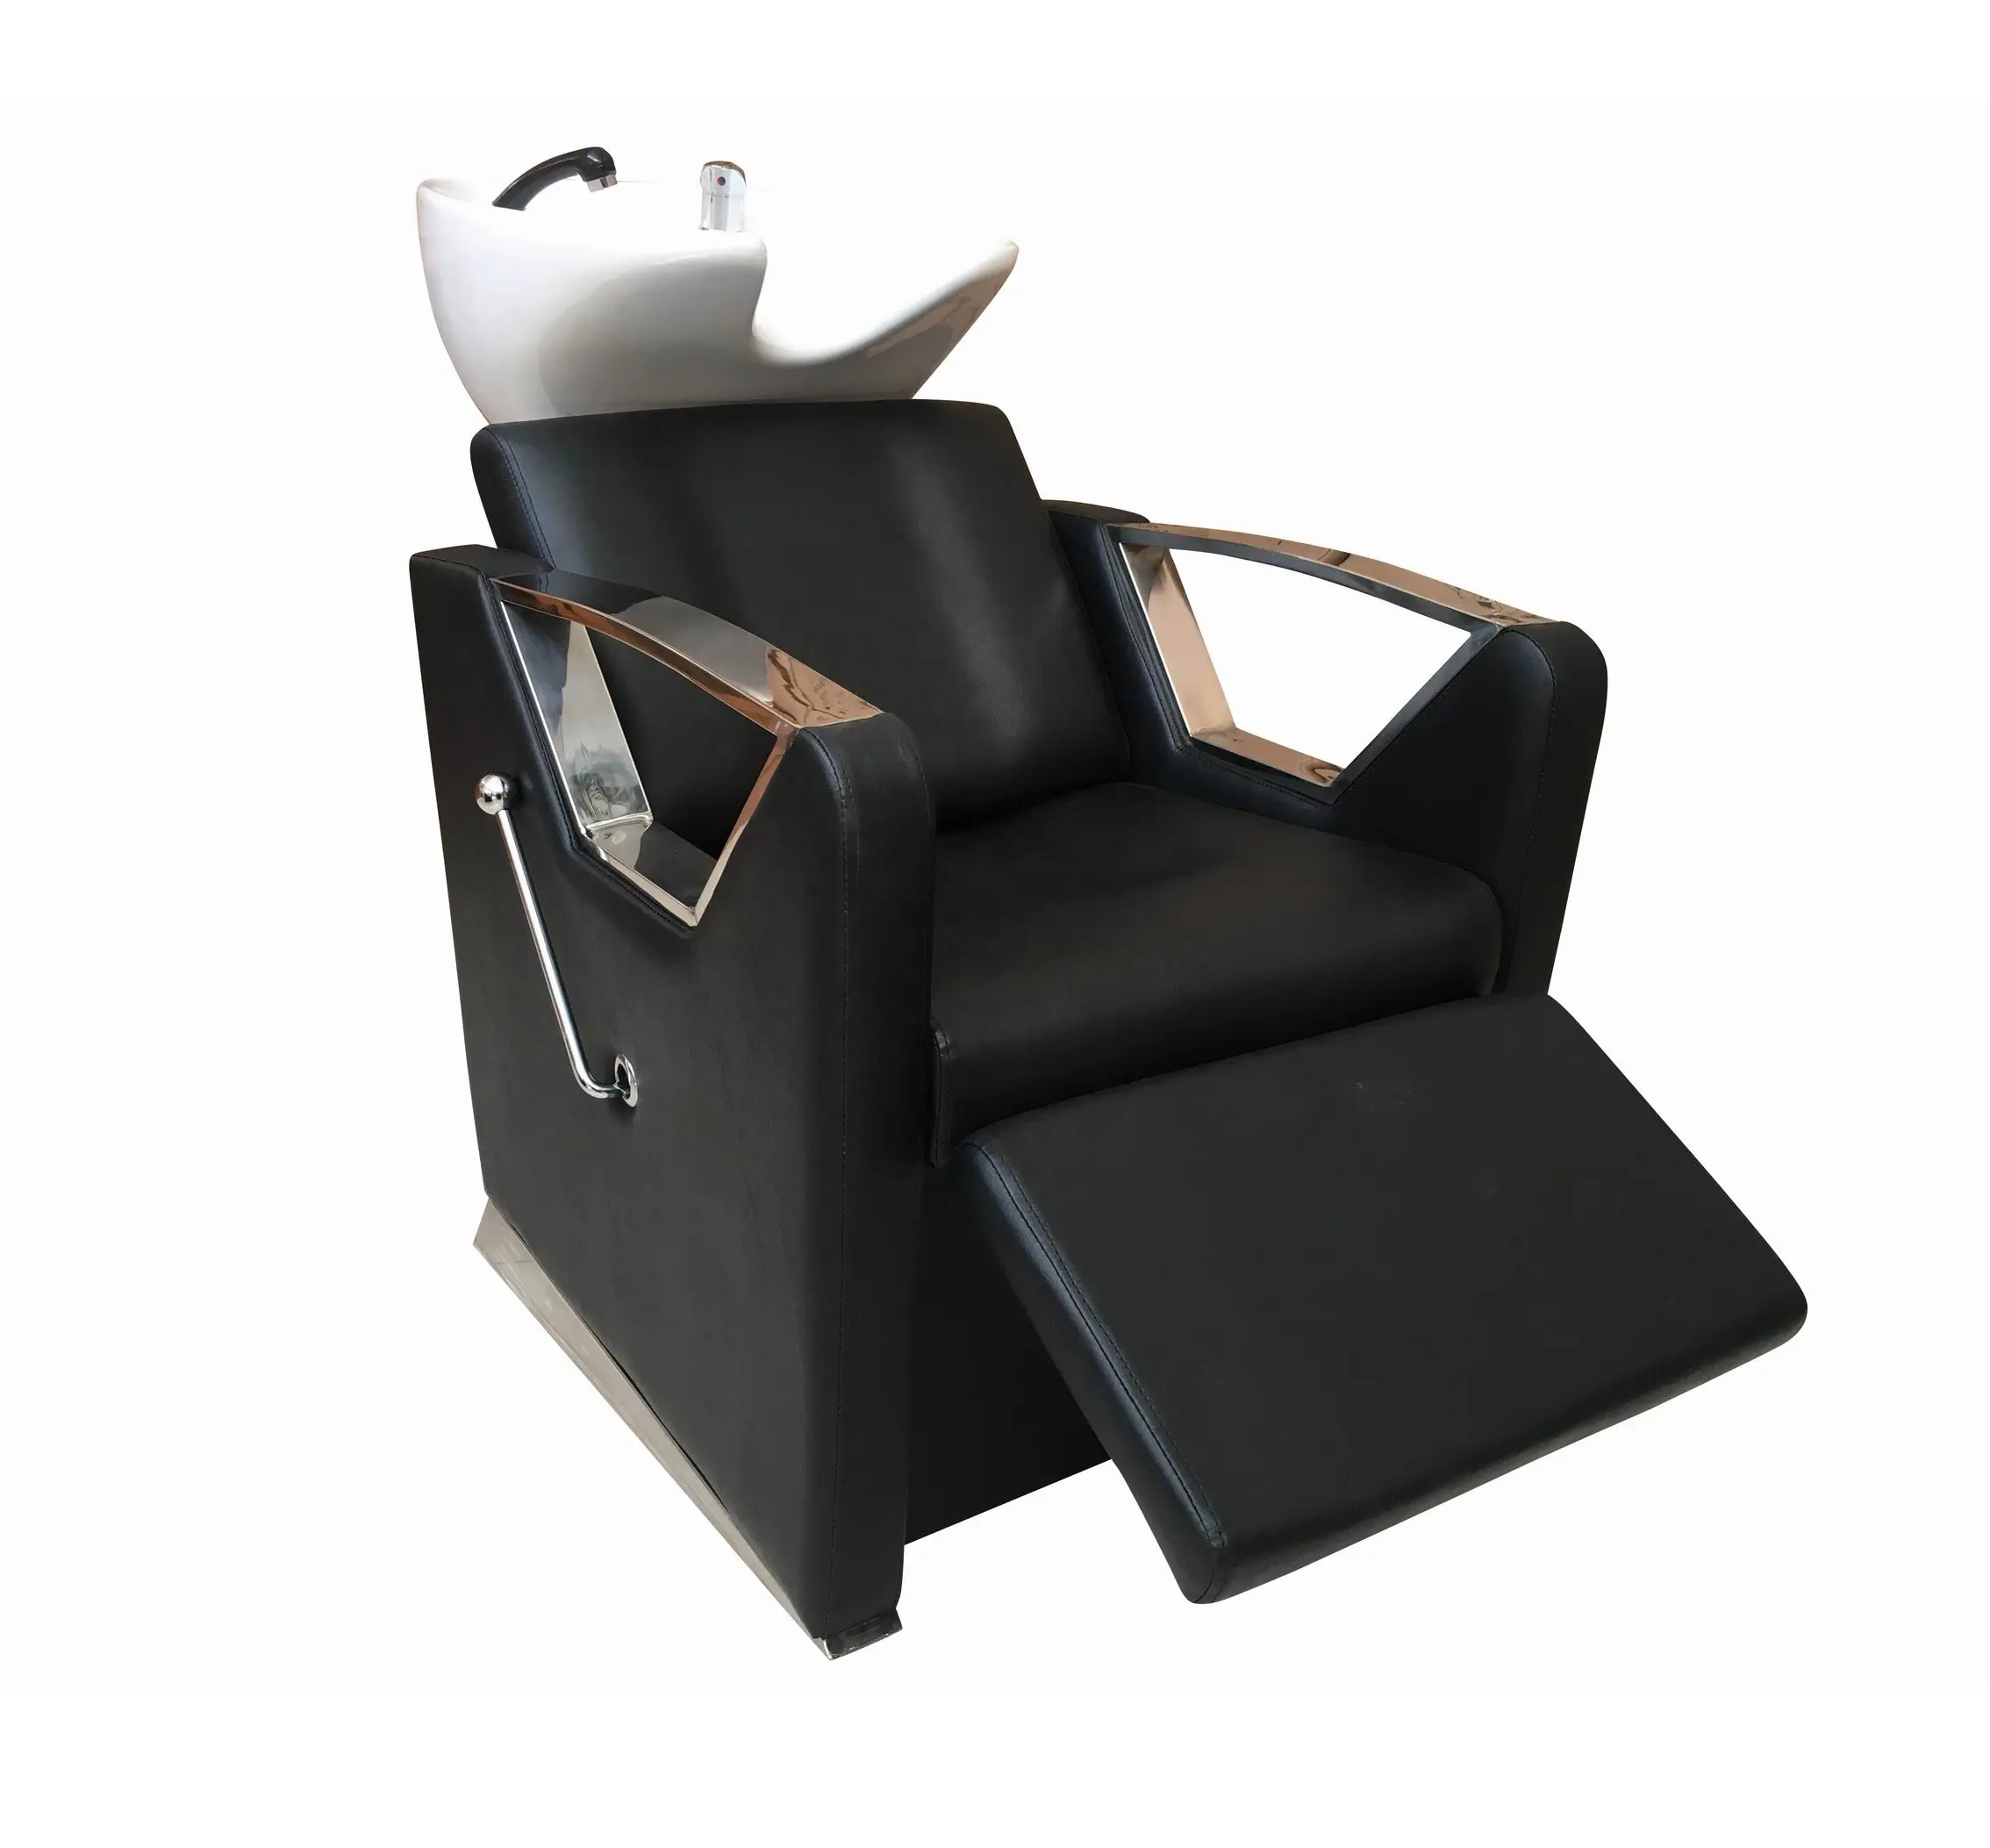 Hotsale shampoo bowls sink and chairs europe style beauty equipment shampoo bed yumi electric shampoo chair